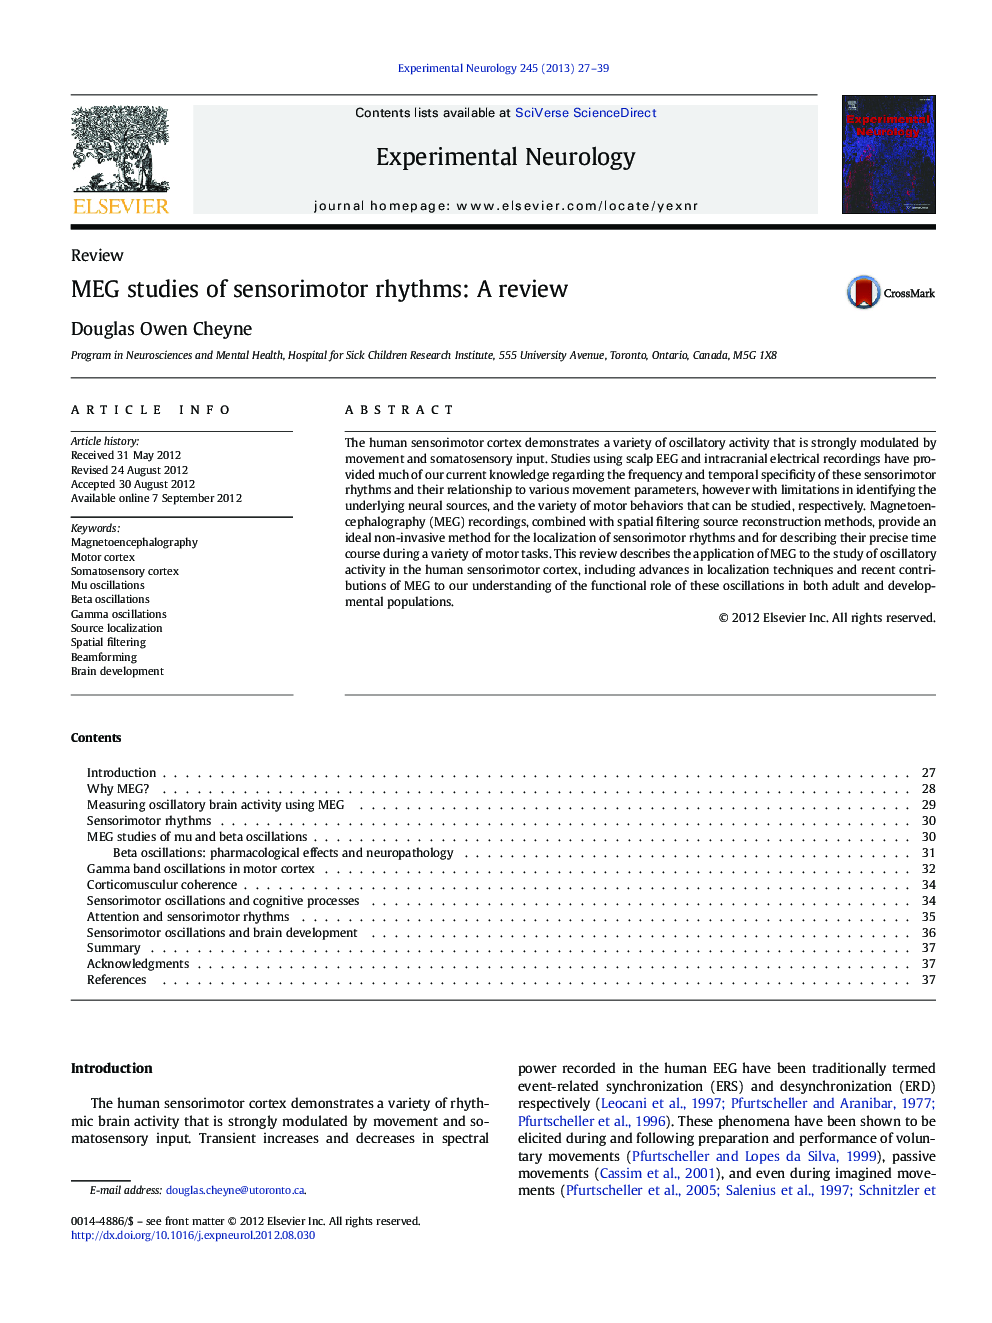 MEG studies of sensorimotor rhythms: A review